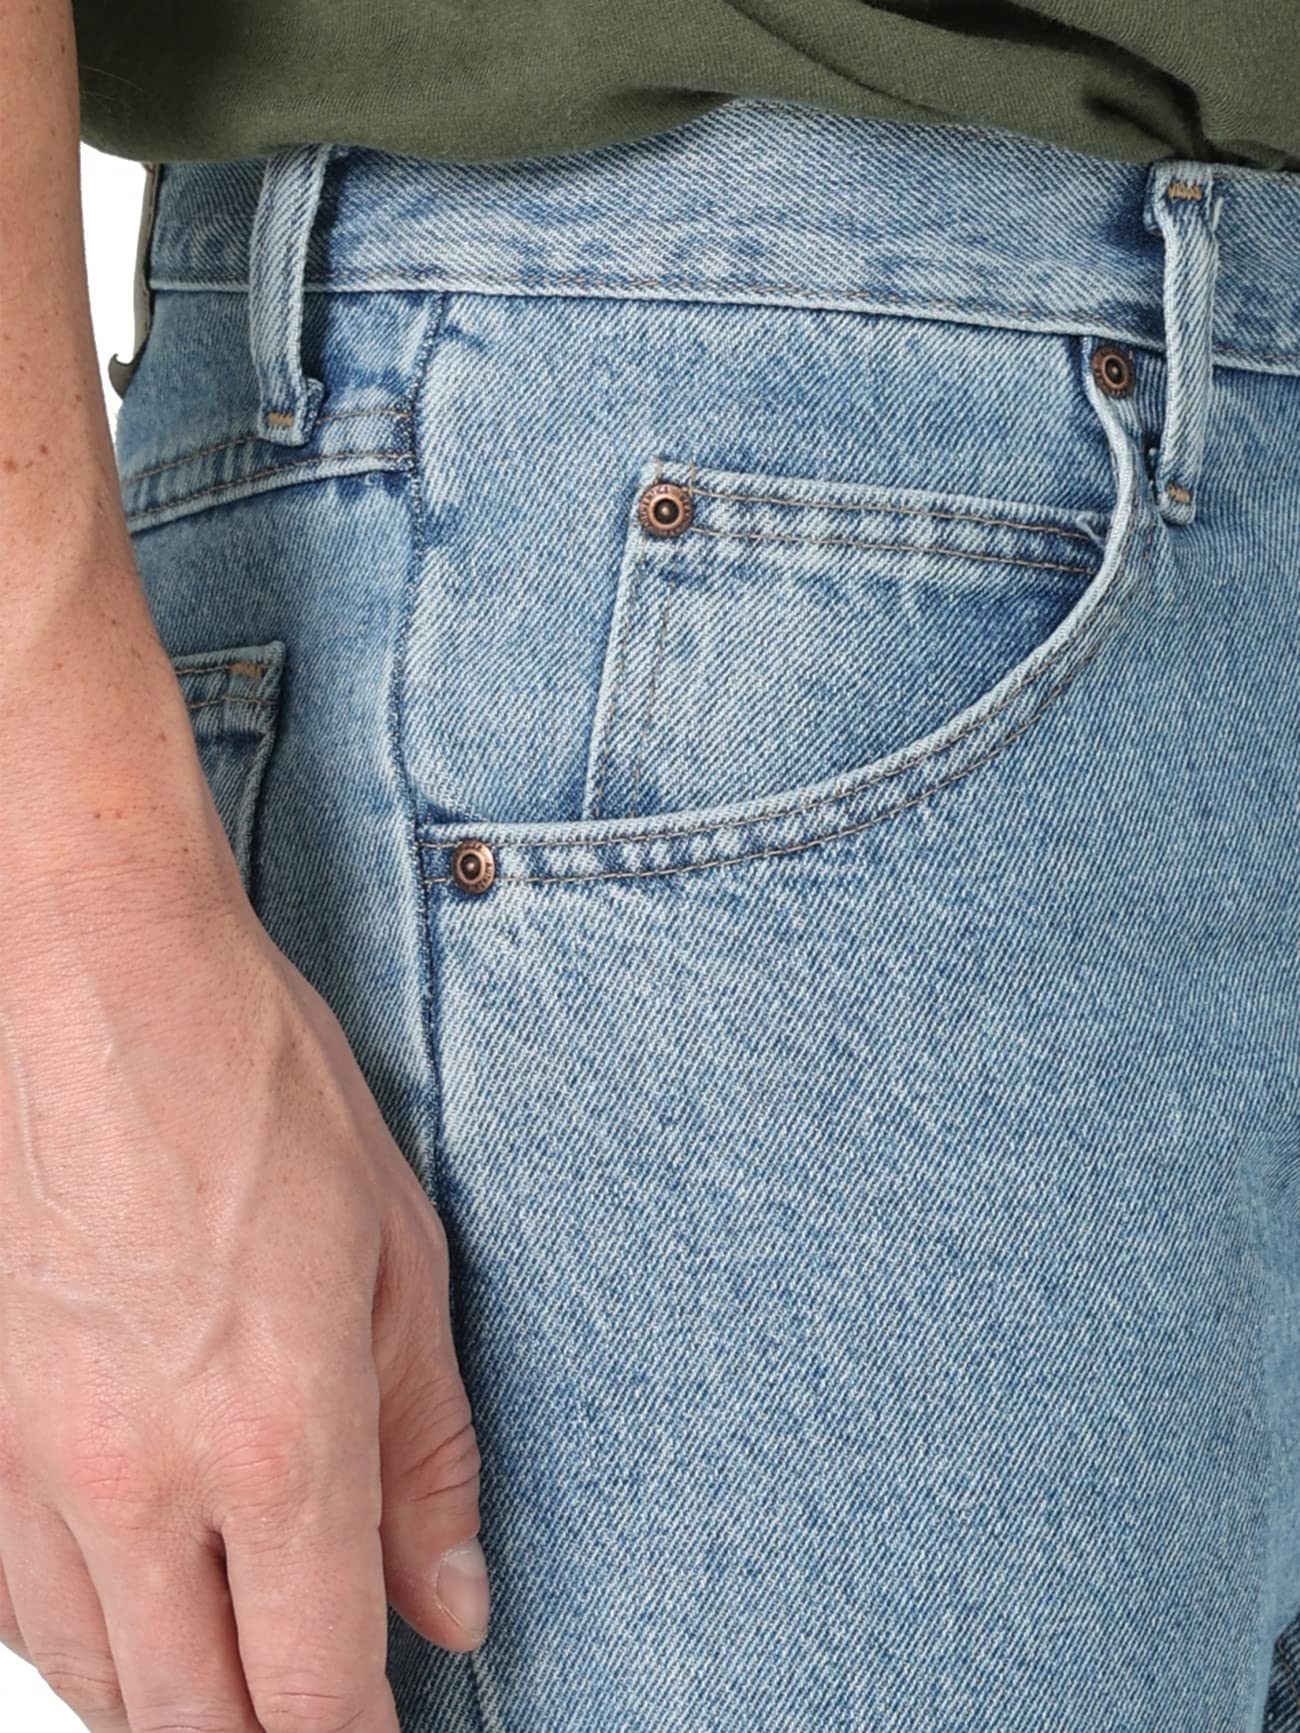 Wrangler Authentics Men's Classic 5-Pocket Regular Fit Cotton Jean, Light Stonewash, 36W x 28L